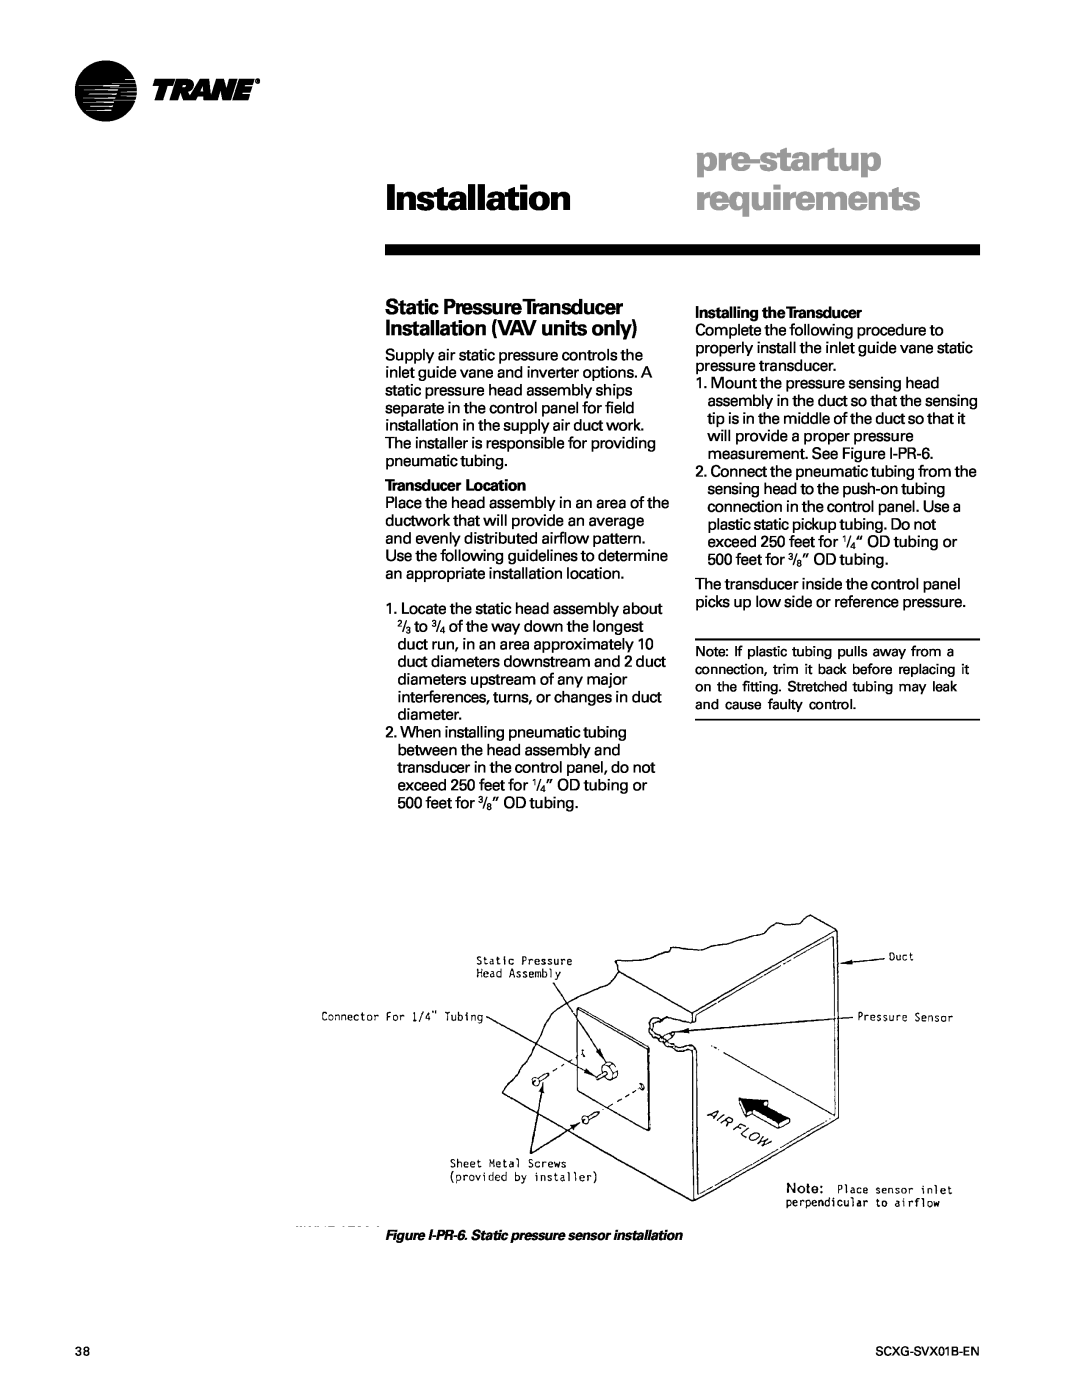 Trane SCXG-SVX01B-EN manual pre-startup, Installation requirements, Transducer Location, Installing theTransducer 